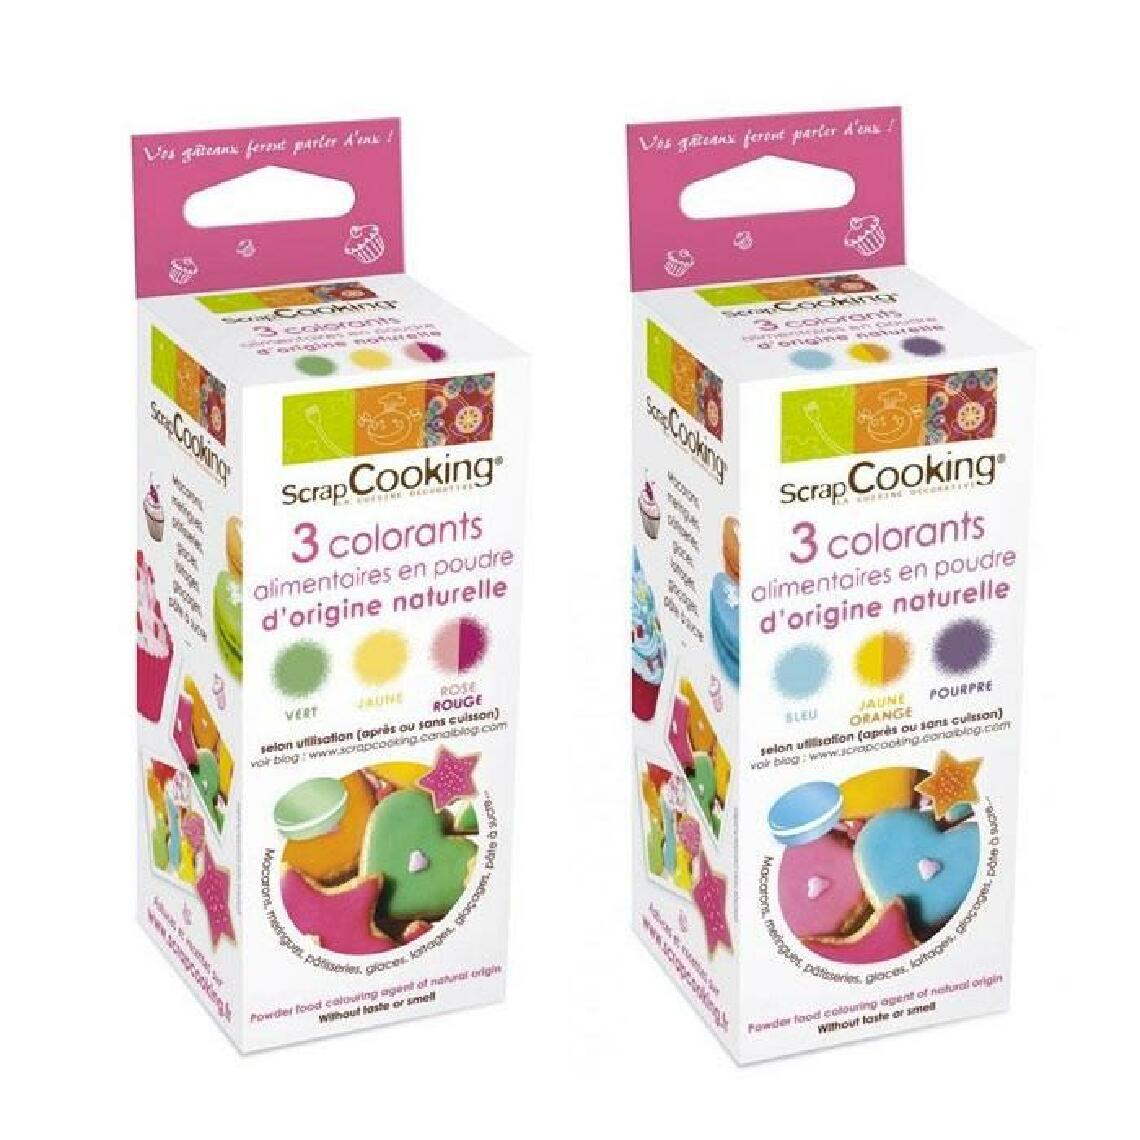 Scrapcooking - Colorants alimentaires naturels rouge, jaune, vert, orange, bleu, violet - Kits créatifs